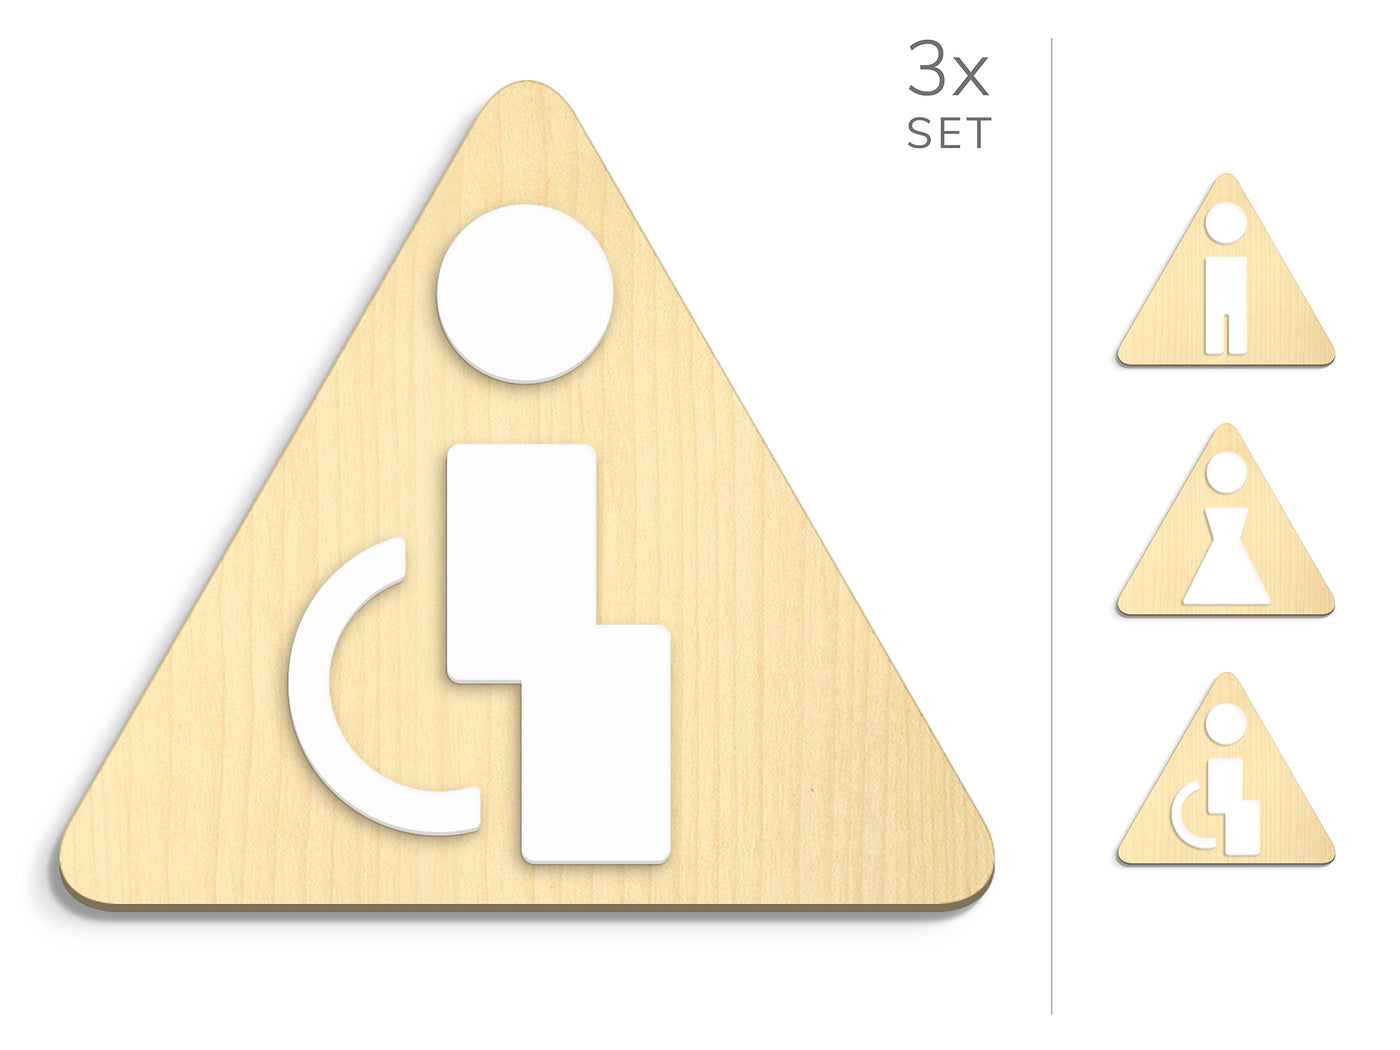 Polygonal, 3x Dreieck Sockel - Toiletten Schild, Satz Türschild WC - Mann, Frau, Behinderte